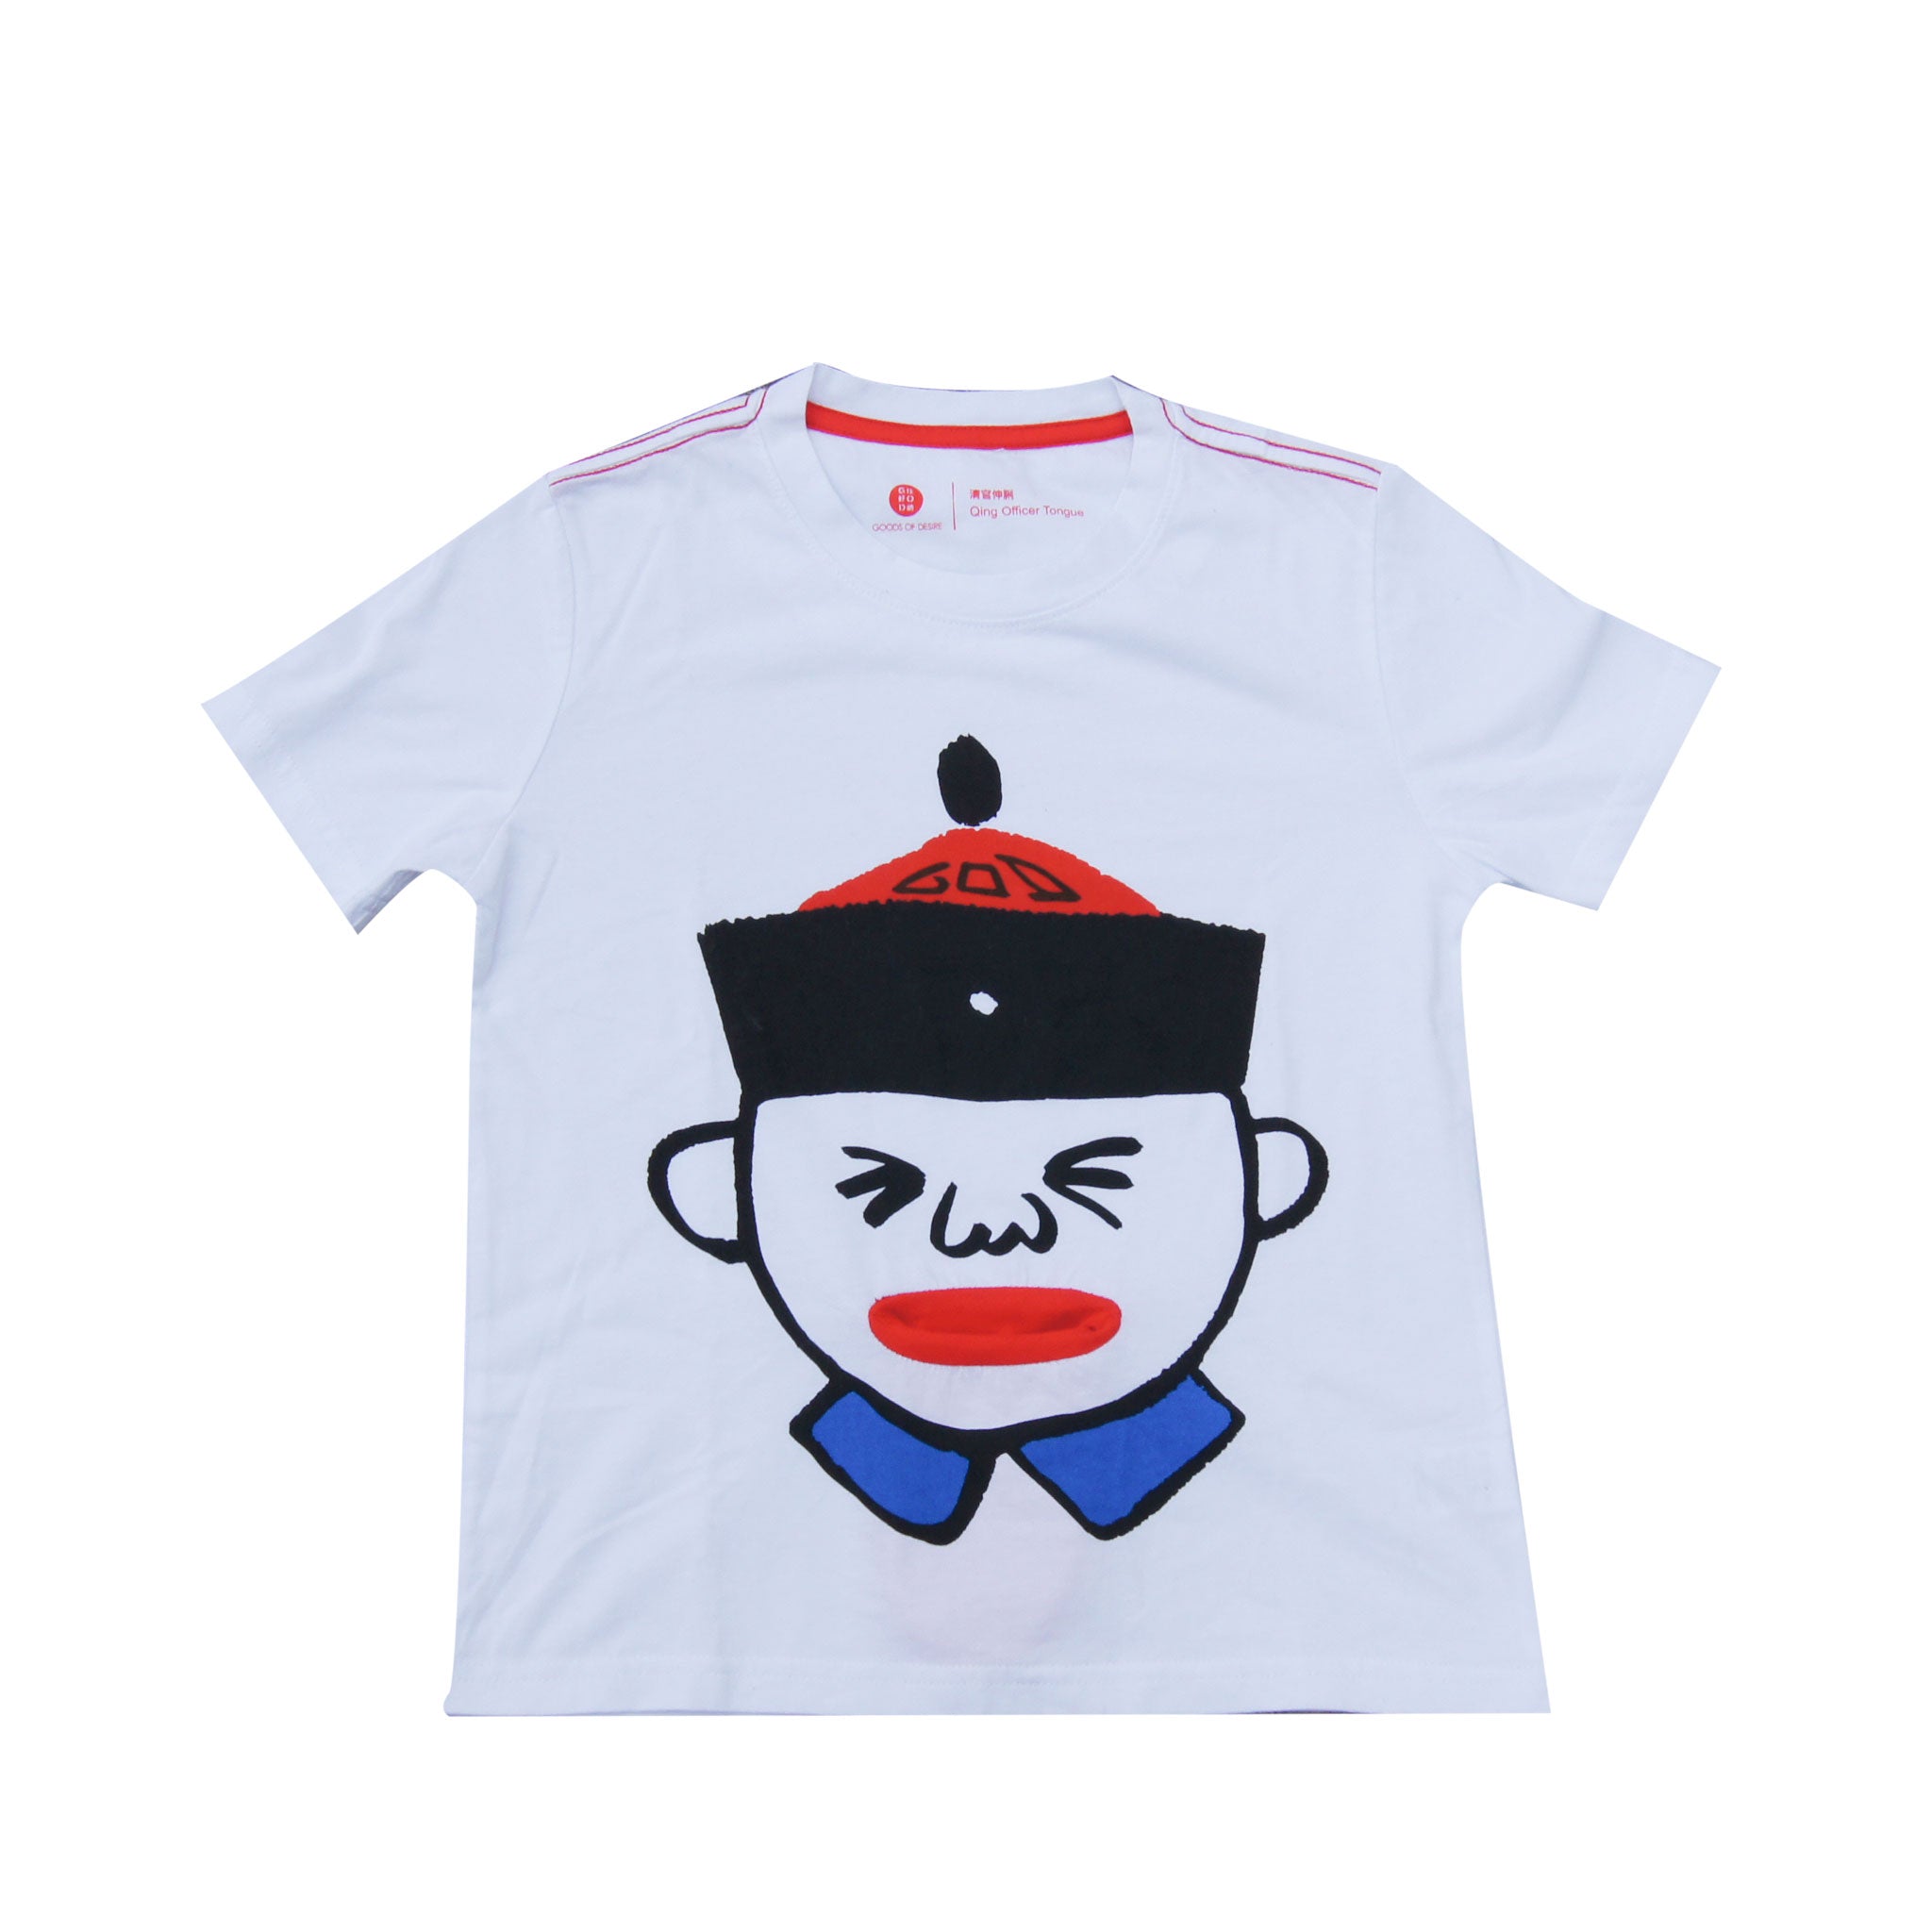 'Qing Officer Tongue' kids t-shirt